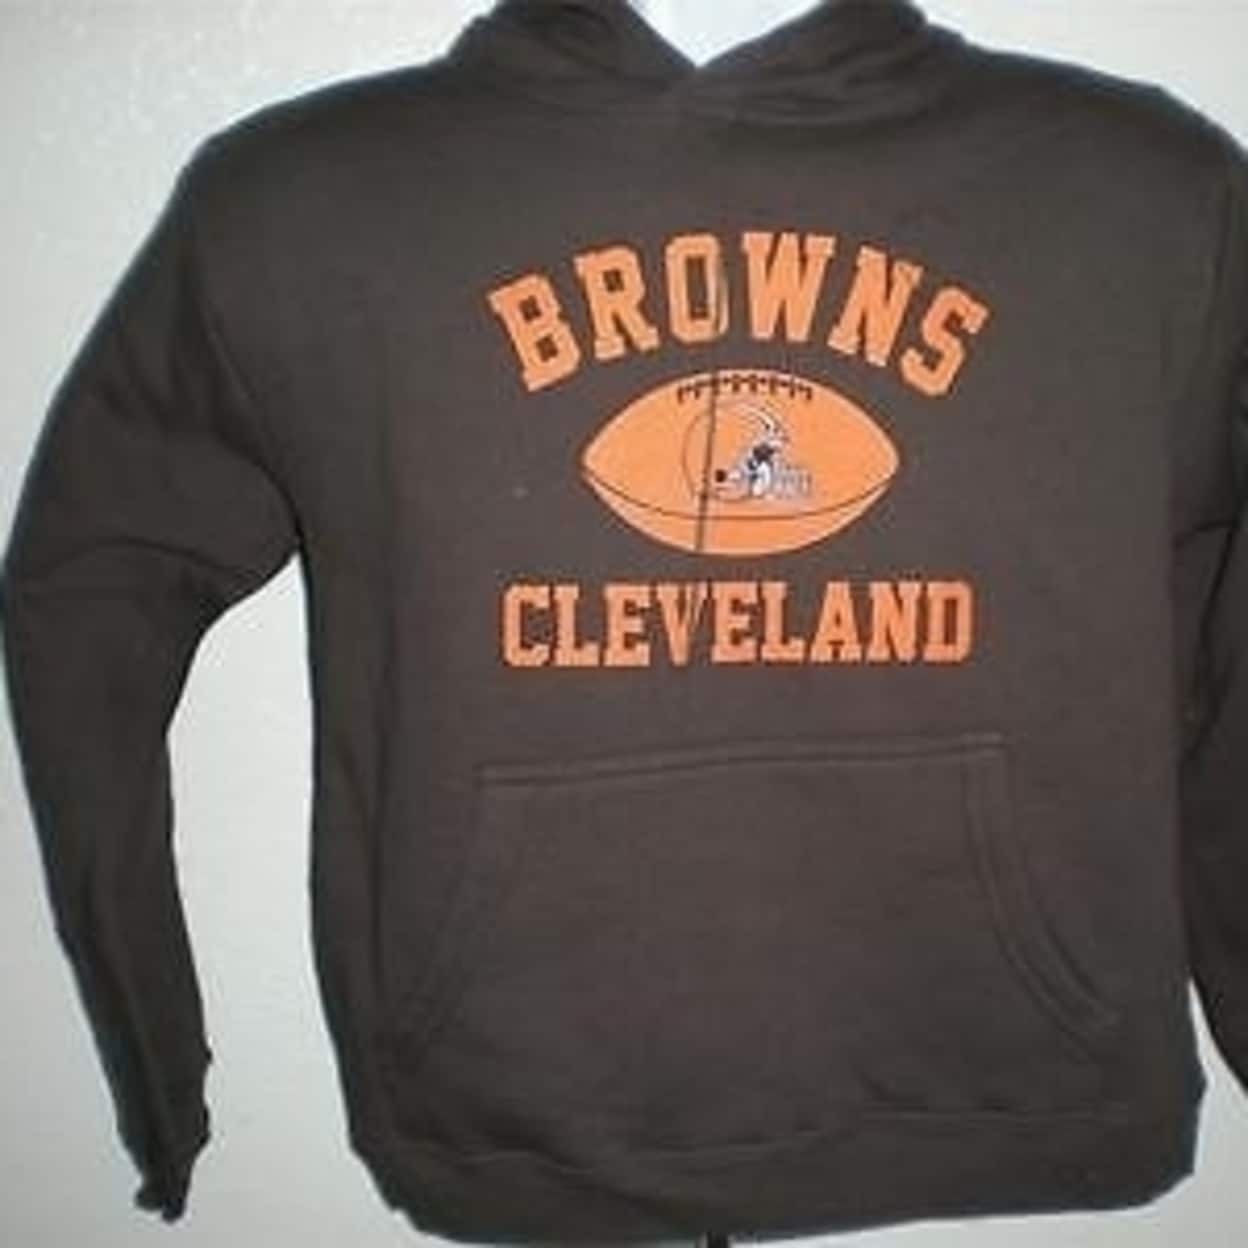 cleveland browns hoodies cheap